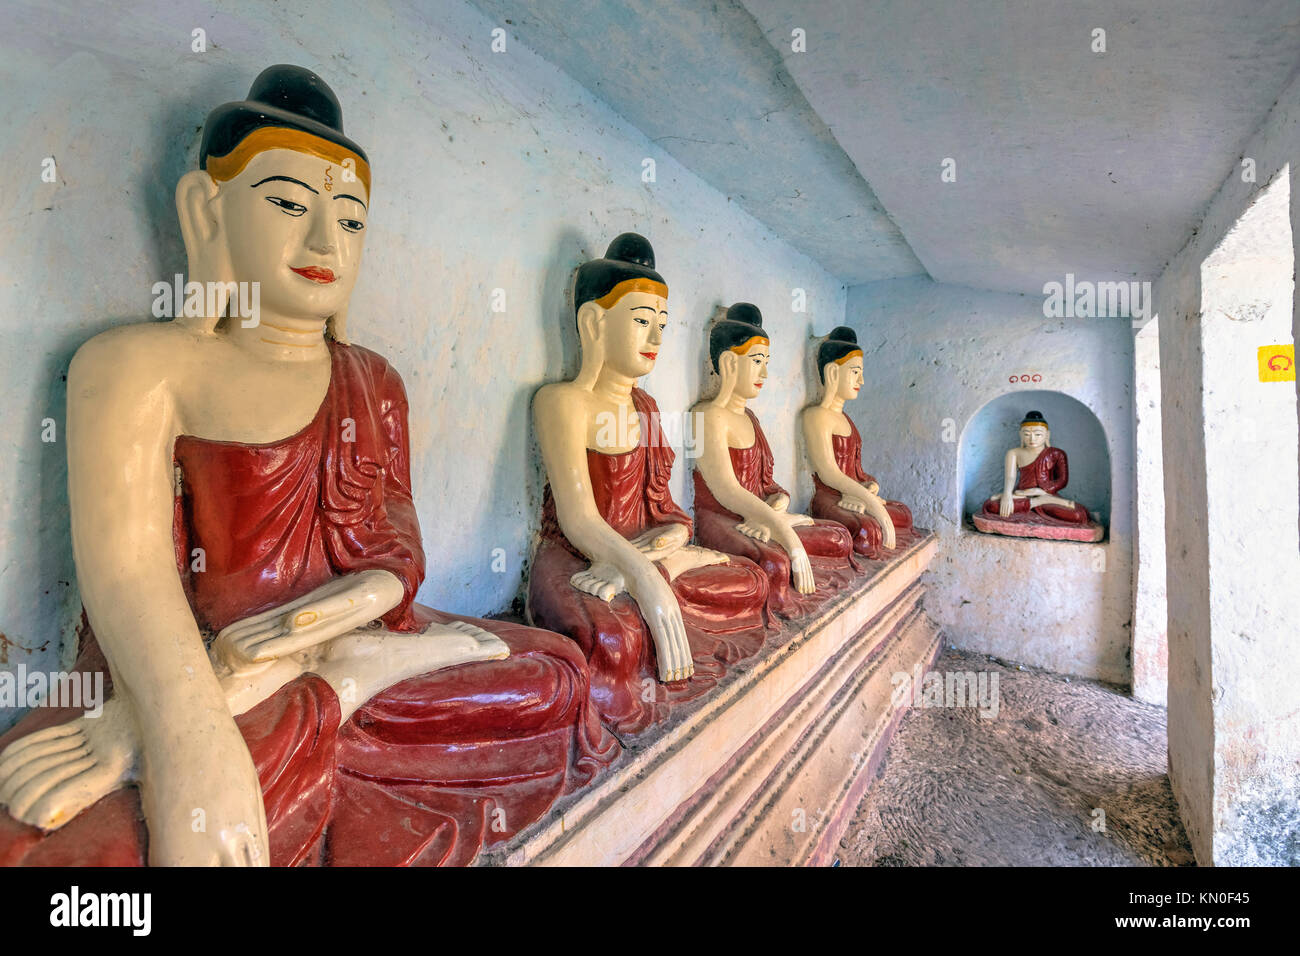 Shwe Ba Taung, Monastère, Pagode, le Myanmar, l'Asie Banque D'Images